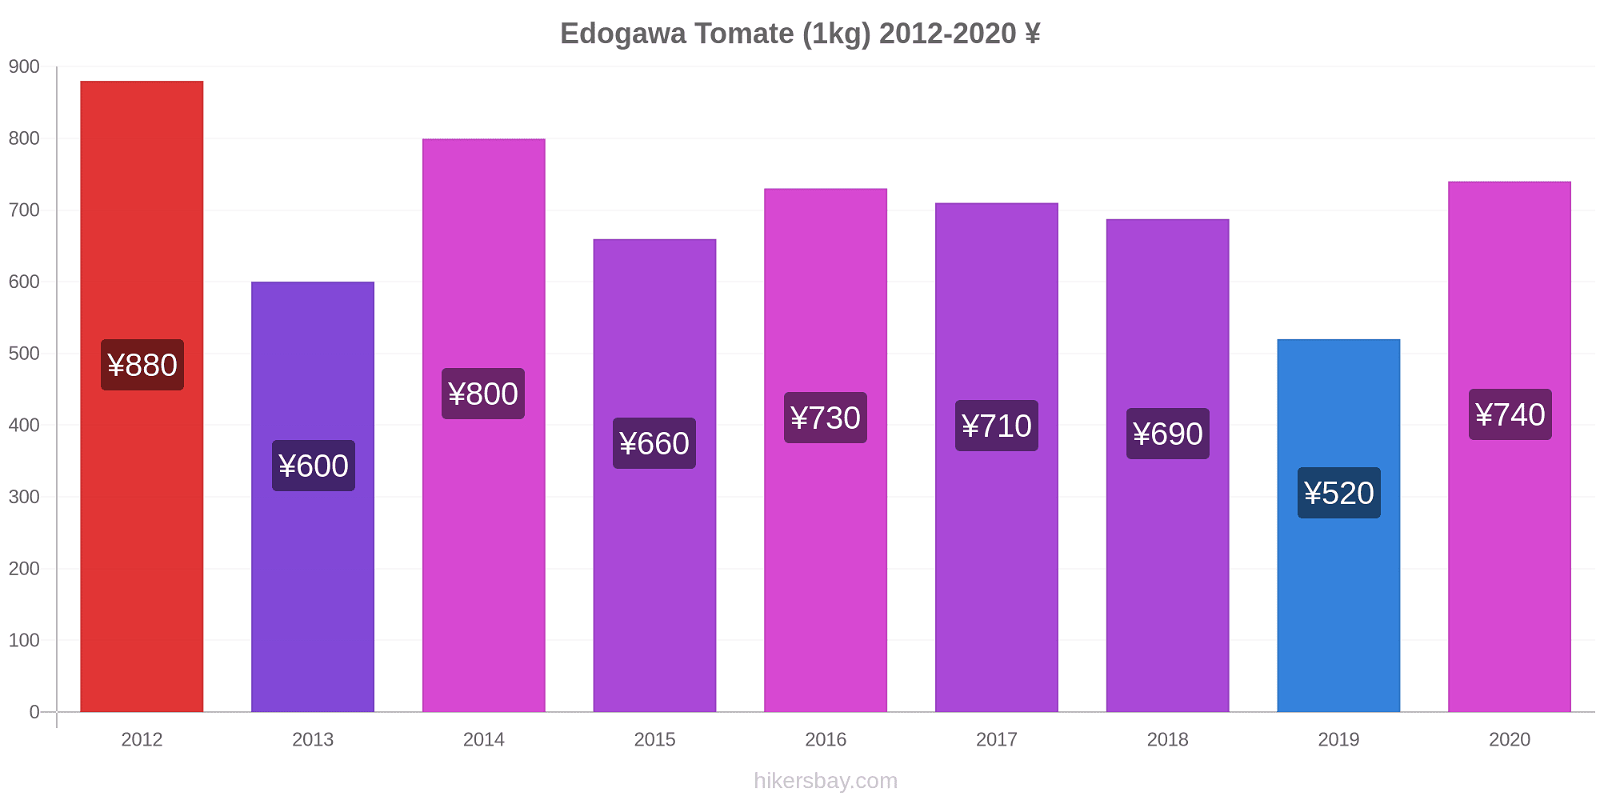 Edogawa modificări de preț Tomate (1kg) hikersbay.com